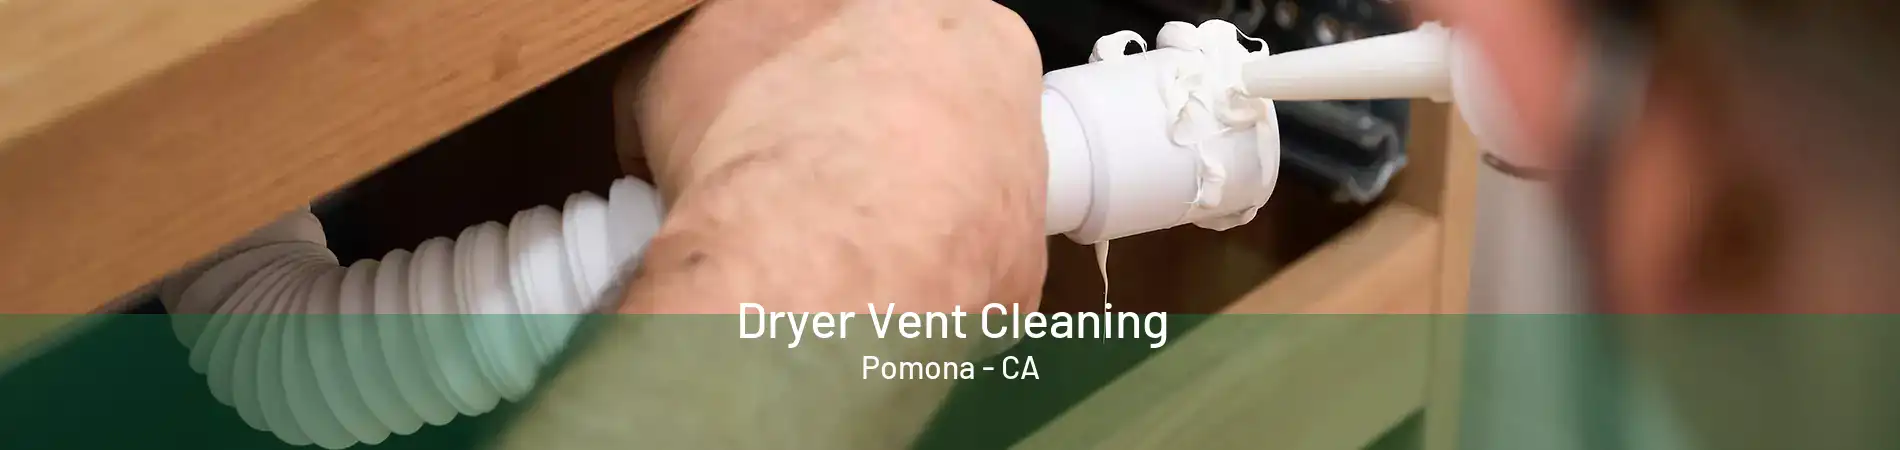 Dryer Vent Cleaning Pomona - CA